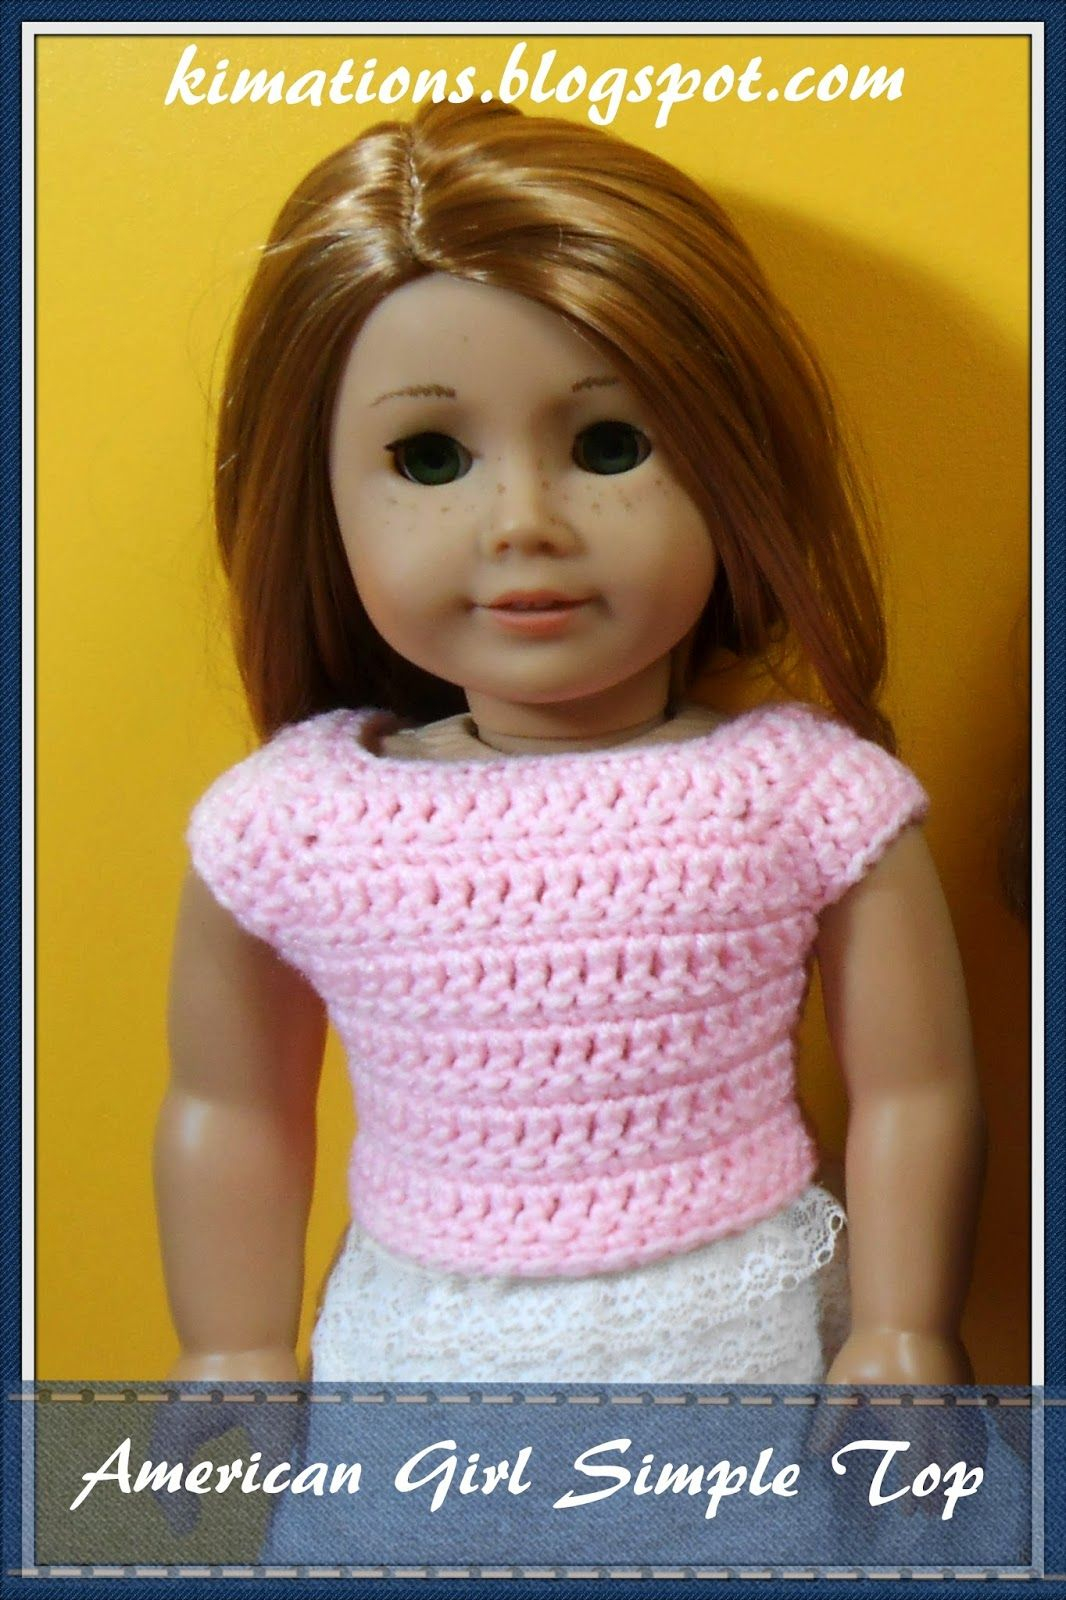 Free Crochet Patterns For American Girl Doll Free Crochet Pattern For 18 Inch Doll Kimations American Girl